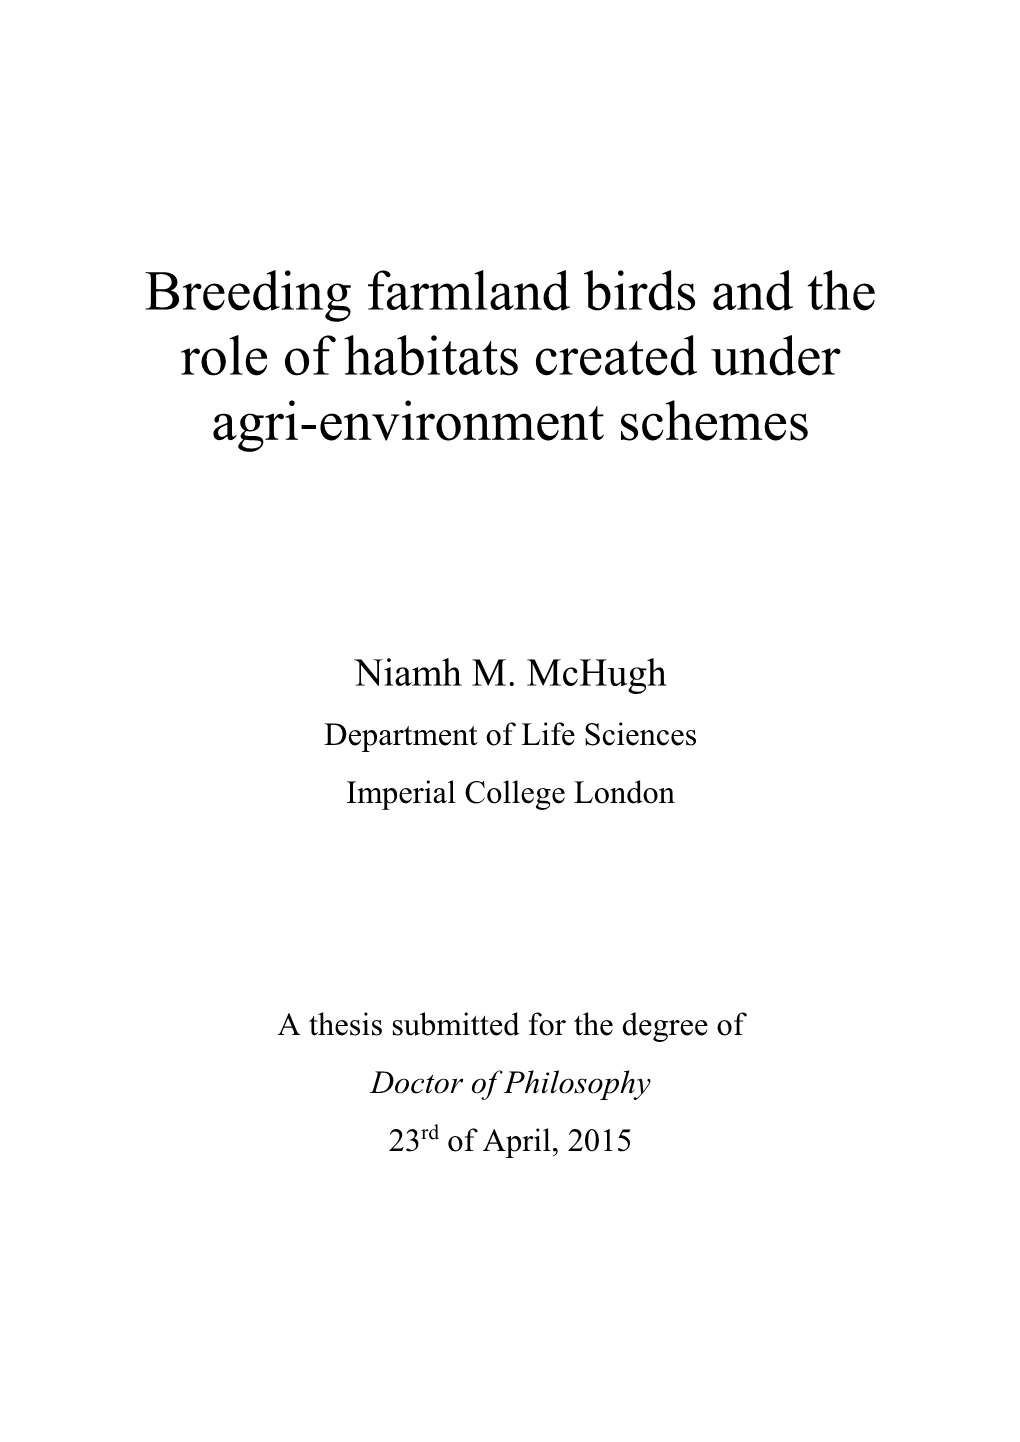 Breeding Farmland Birds and the Role of Habitats Created Under Agri-Environment Schemes